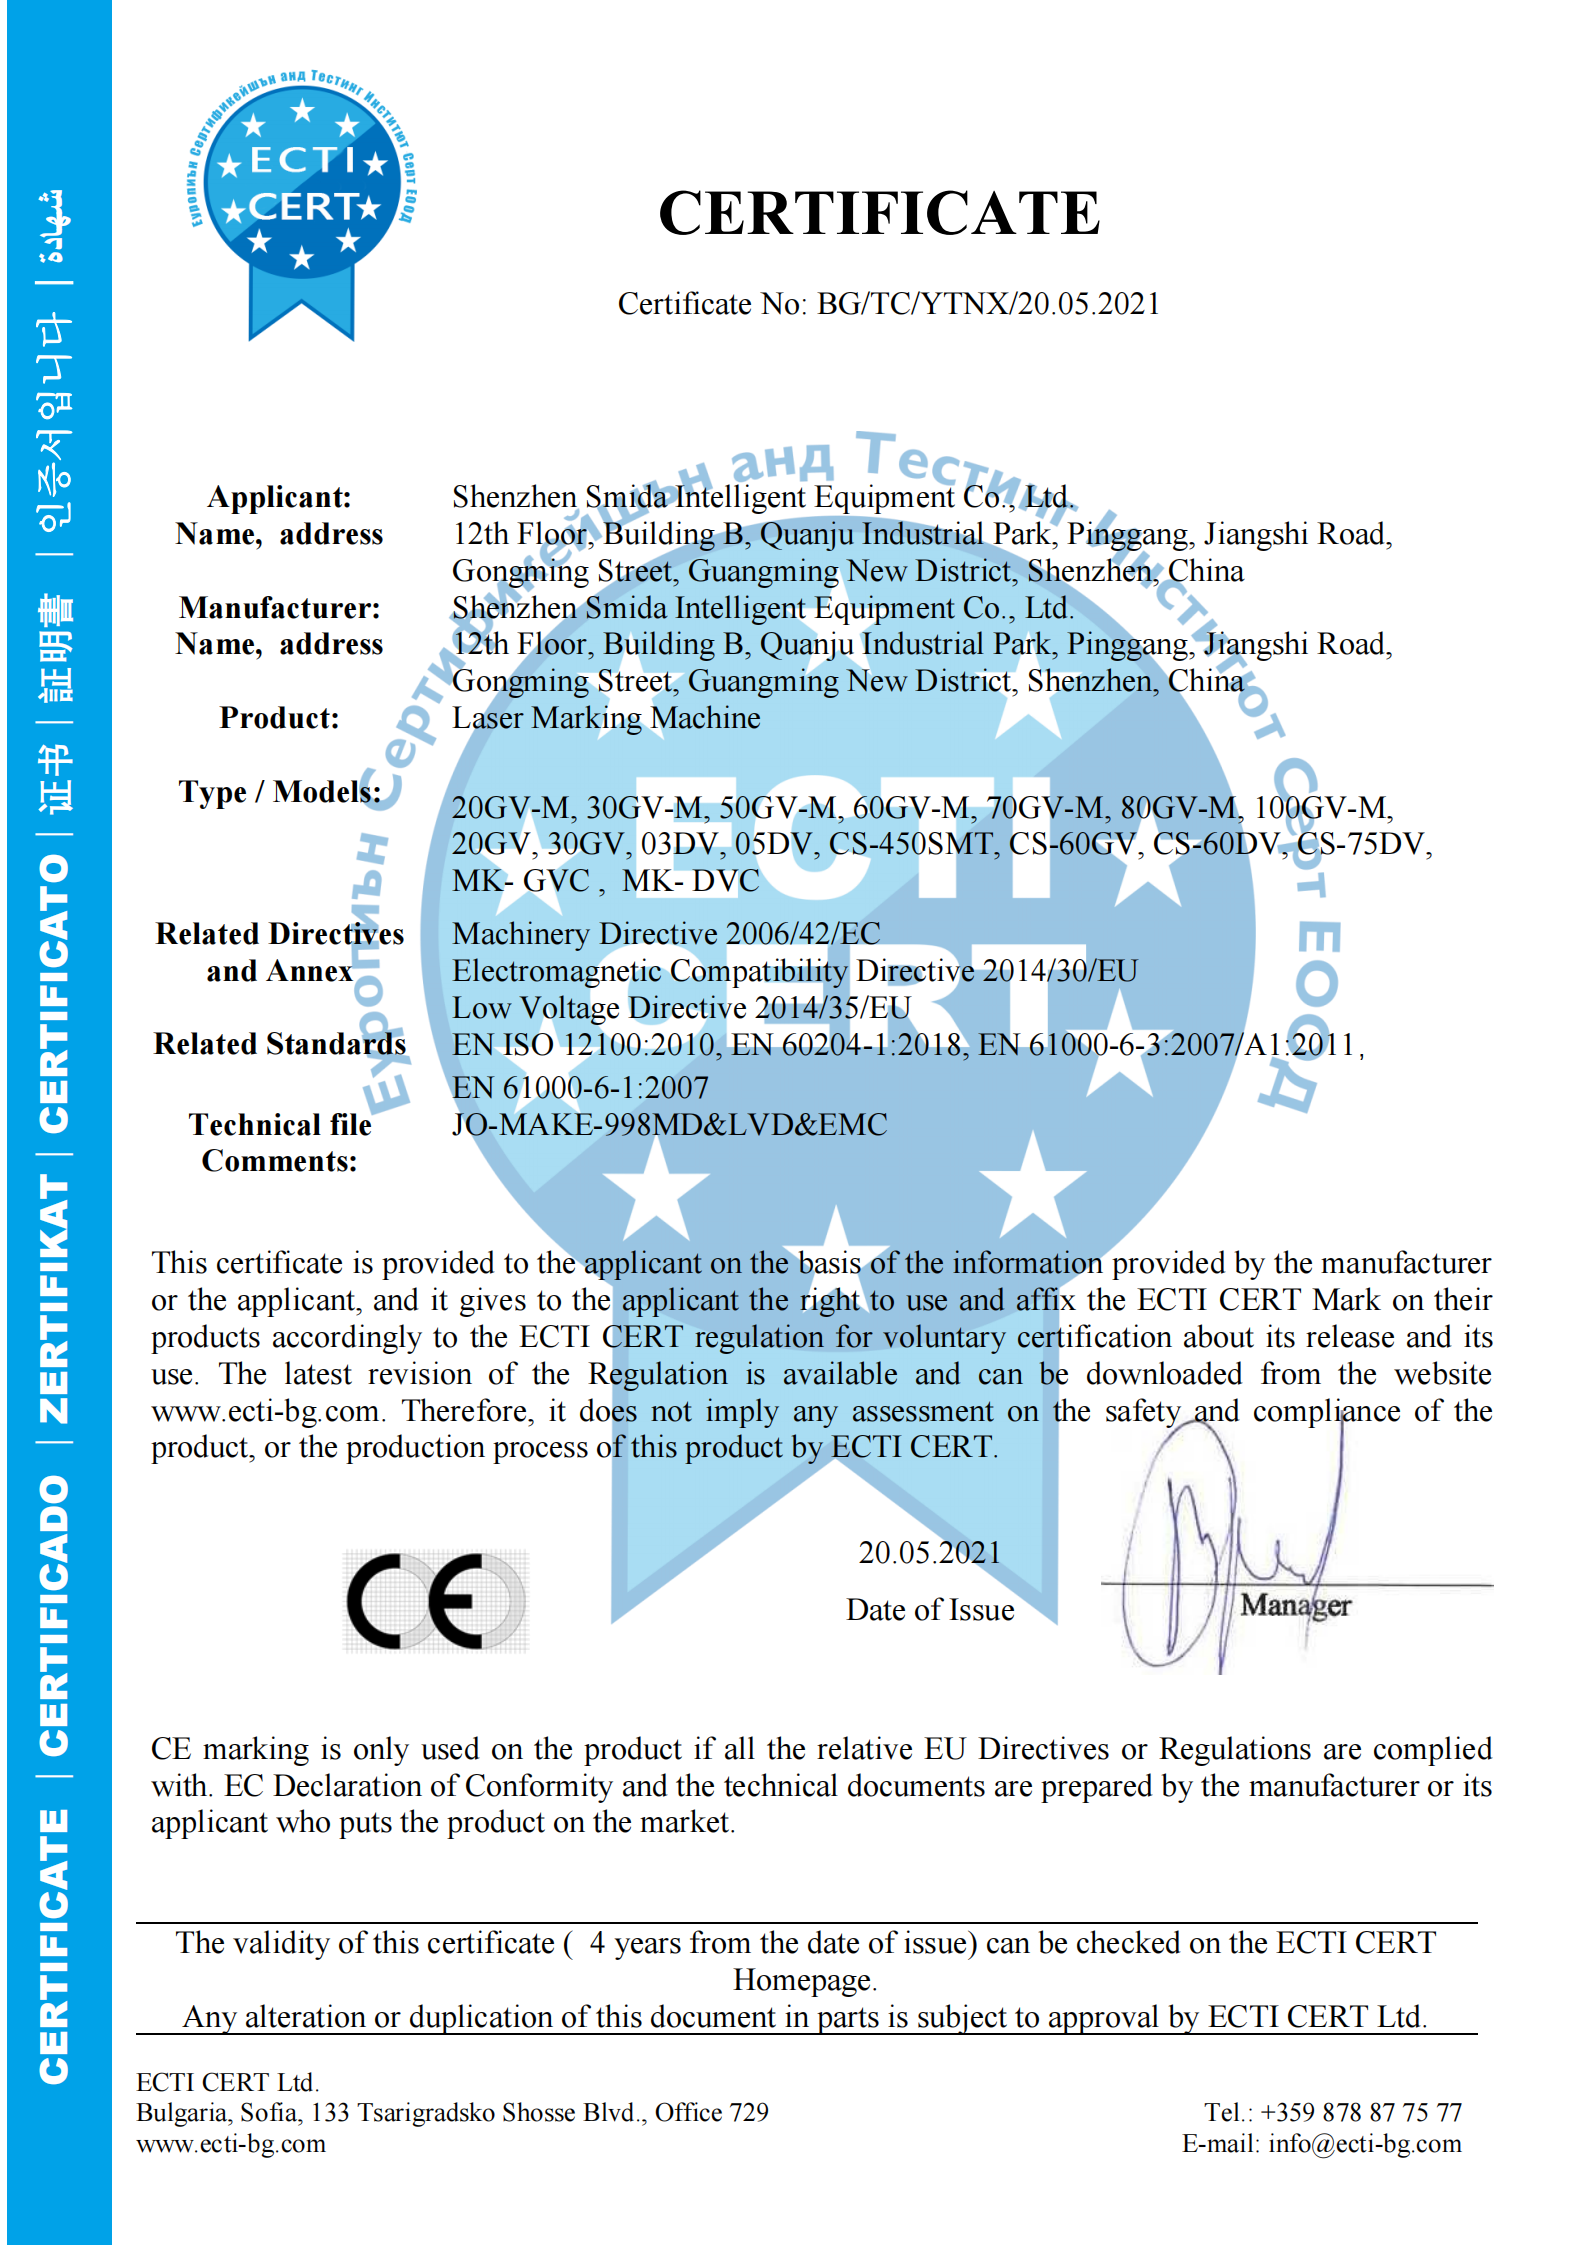 CE addidit certificationem pro laseris notati machina